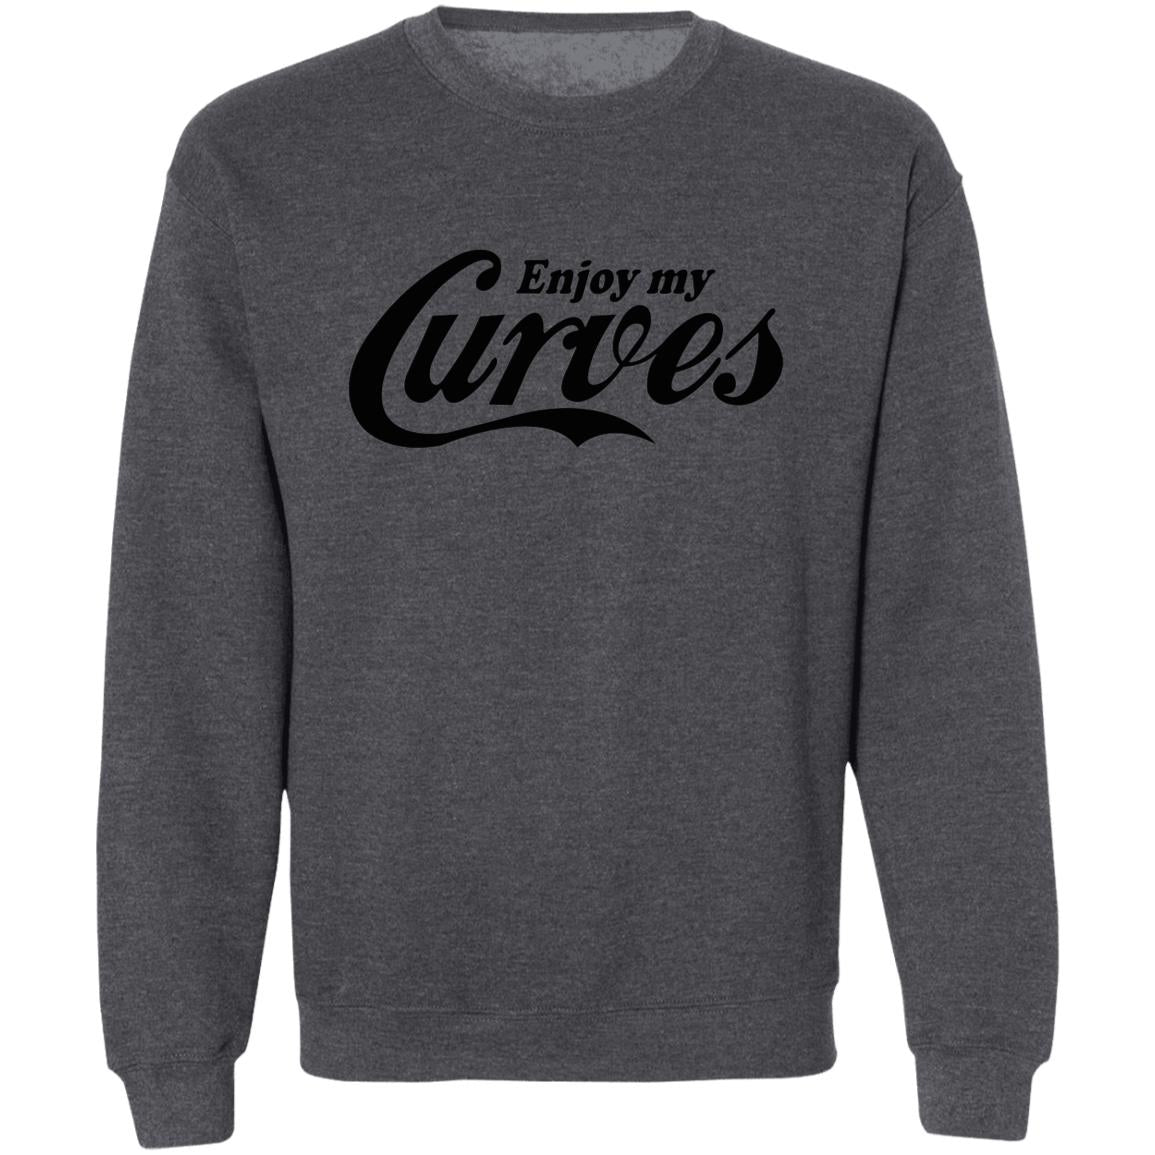 Enjoy my curves -  Sweatshirt